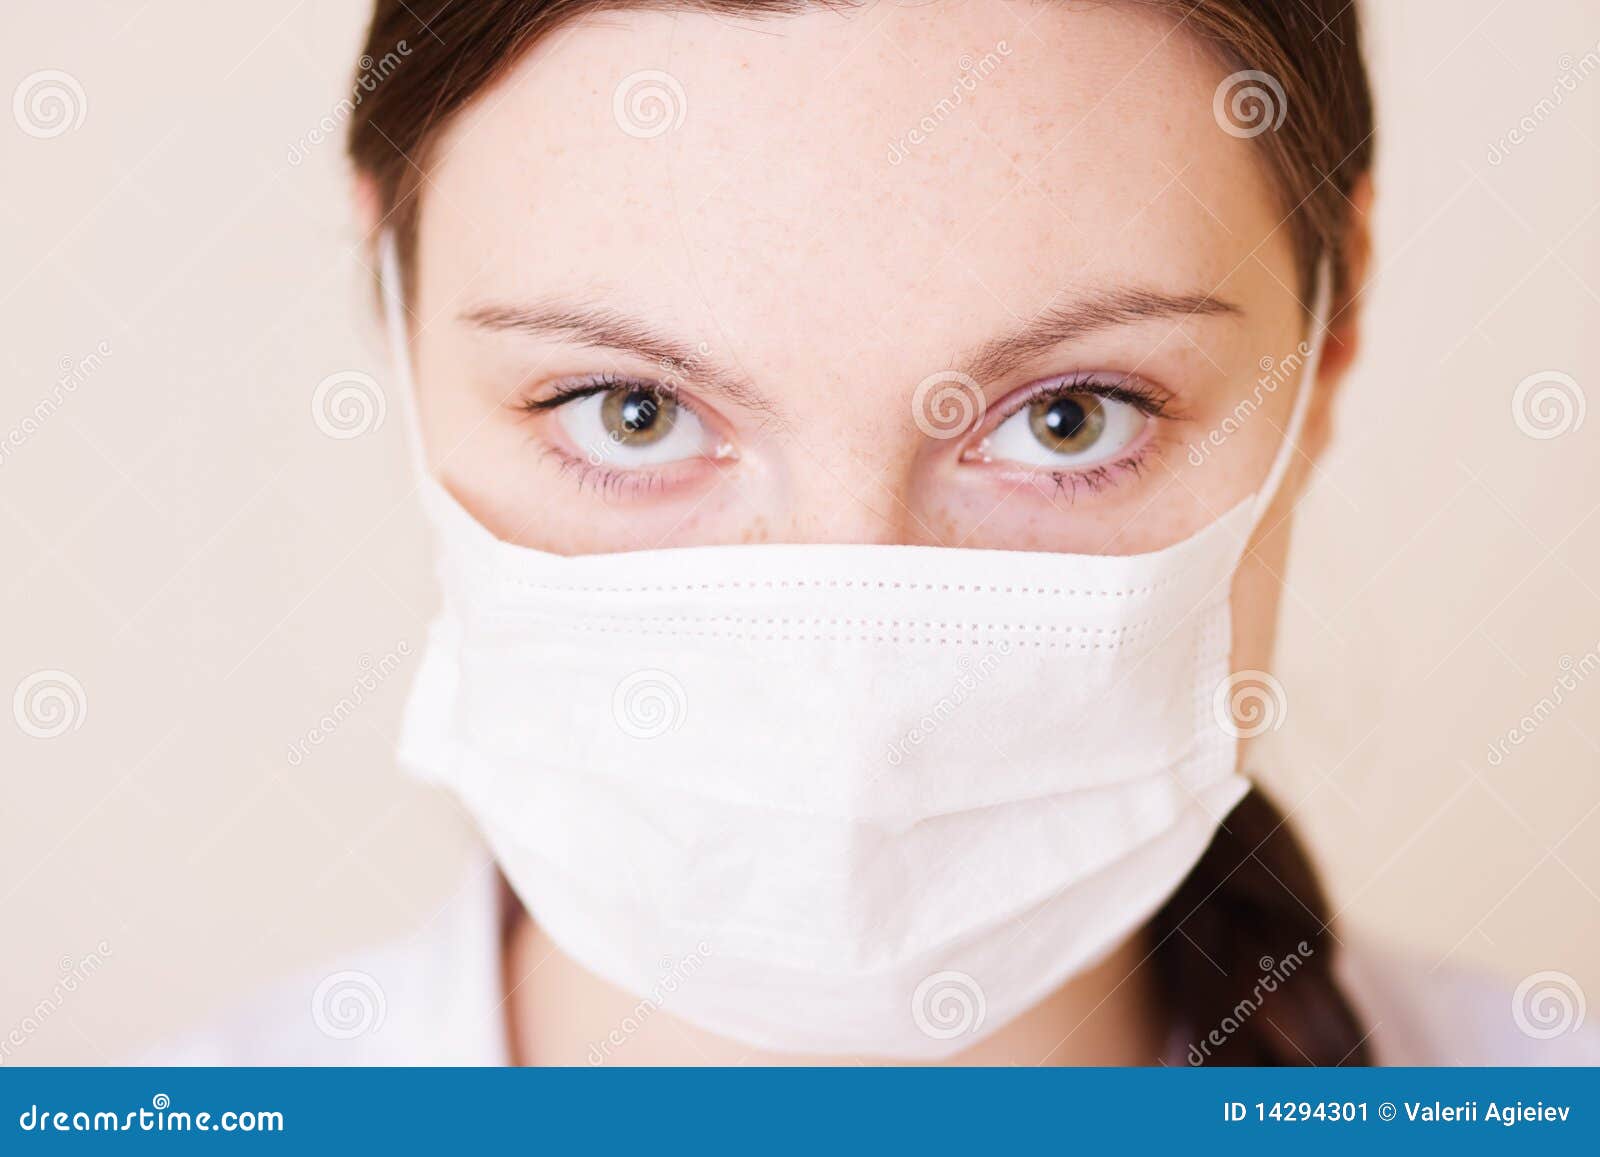 Nurse with mask stock image. Image of background, stares - 14294301